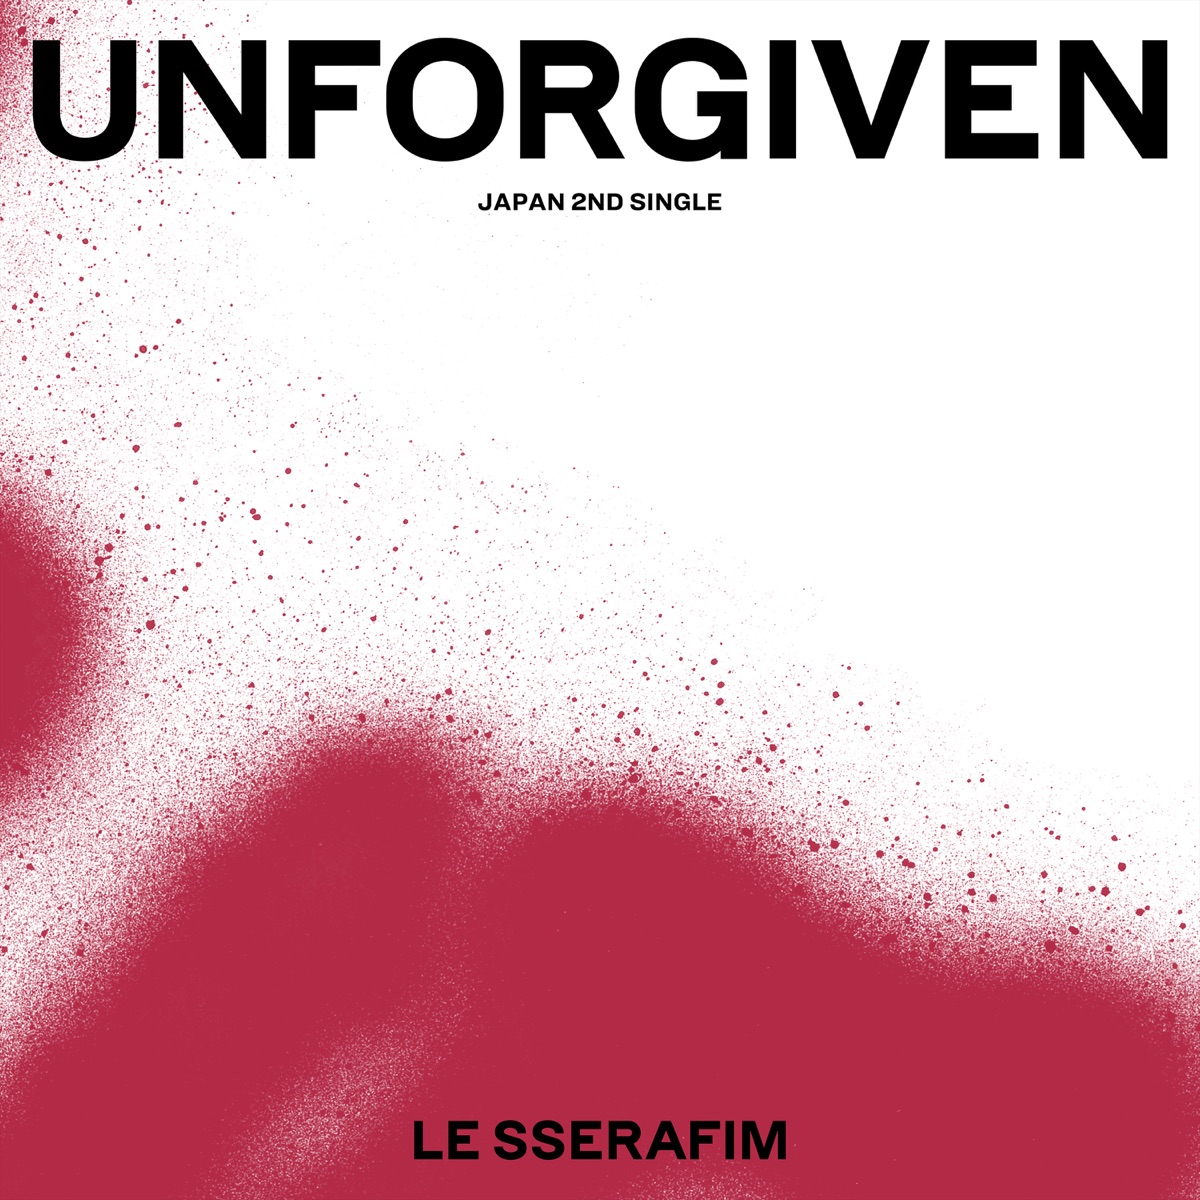 『LE SSERAFIM - UNFORGIVEN (feat. Nile Rodgers, Ado) -Japanese ver.-』収録の『UNFORGIVEN (Japan 2nd Single)』ジャケット